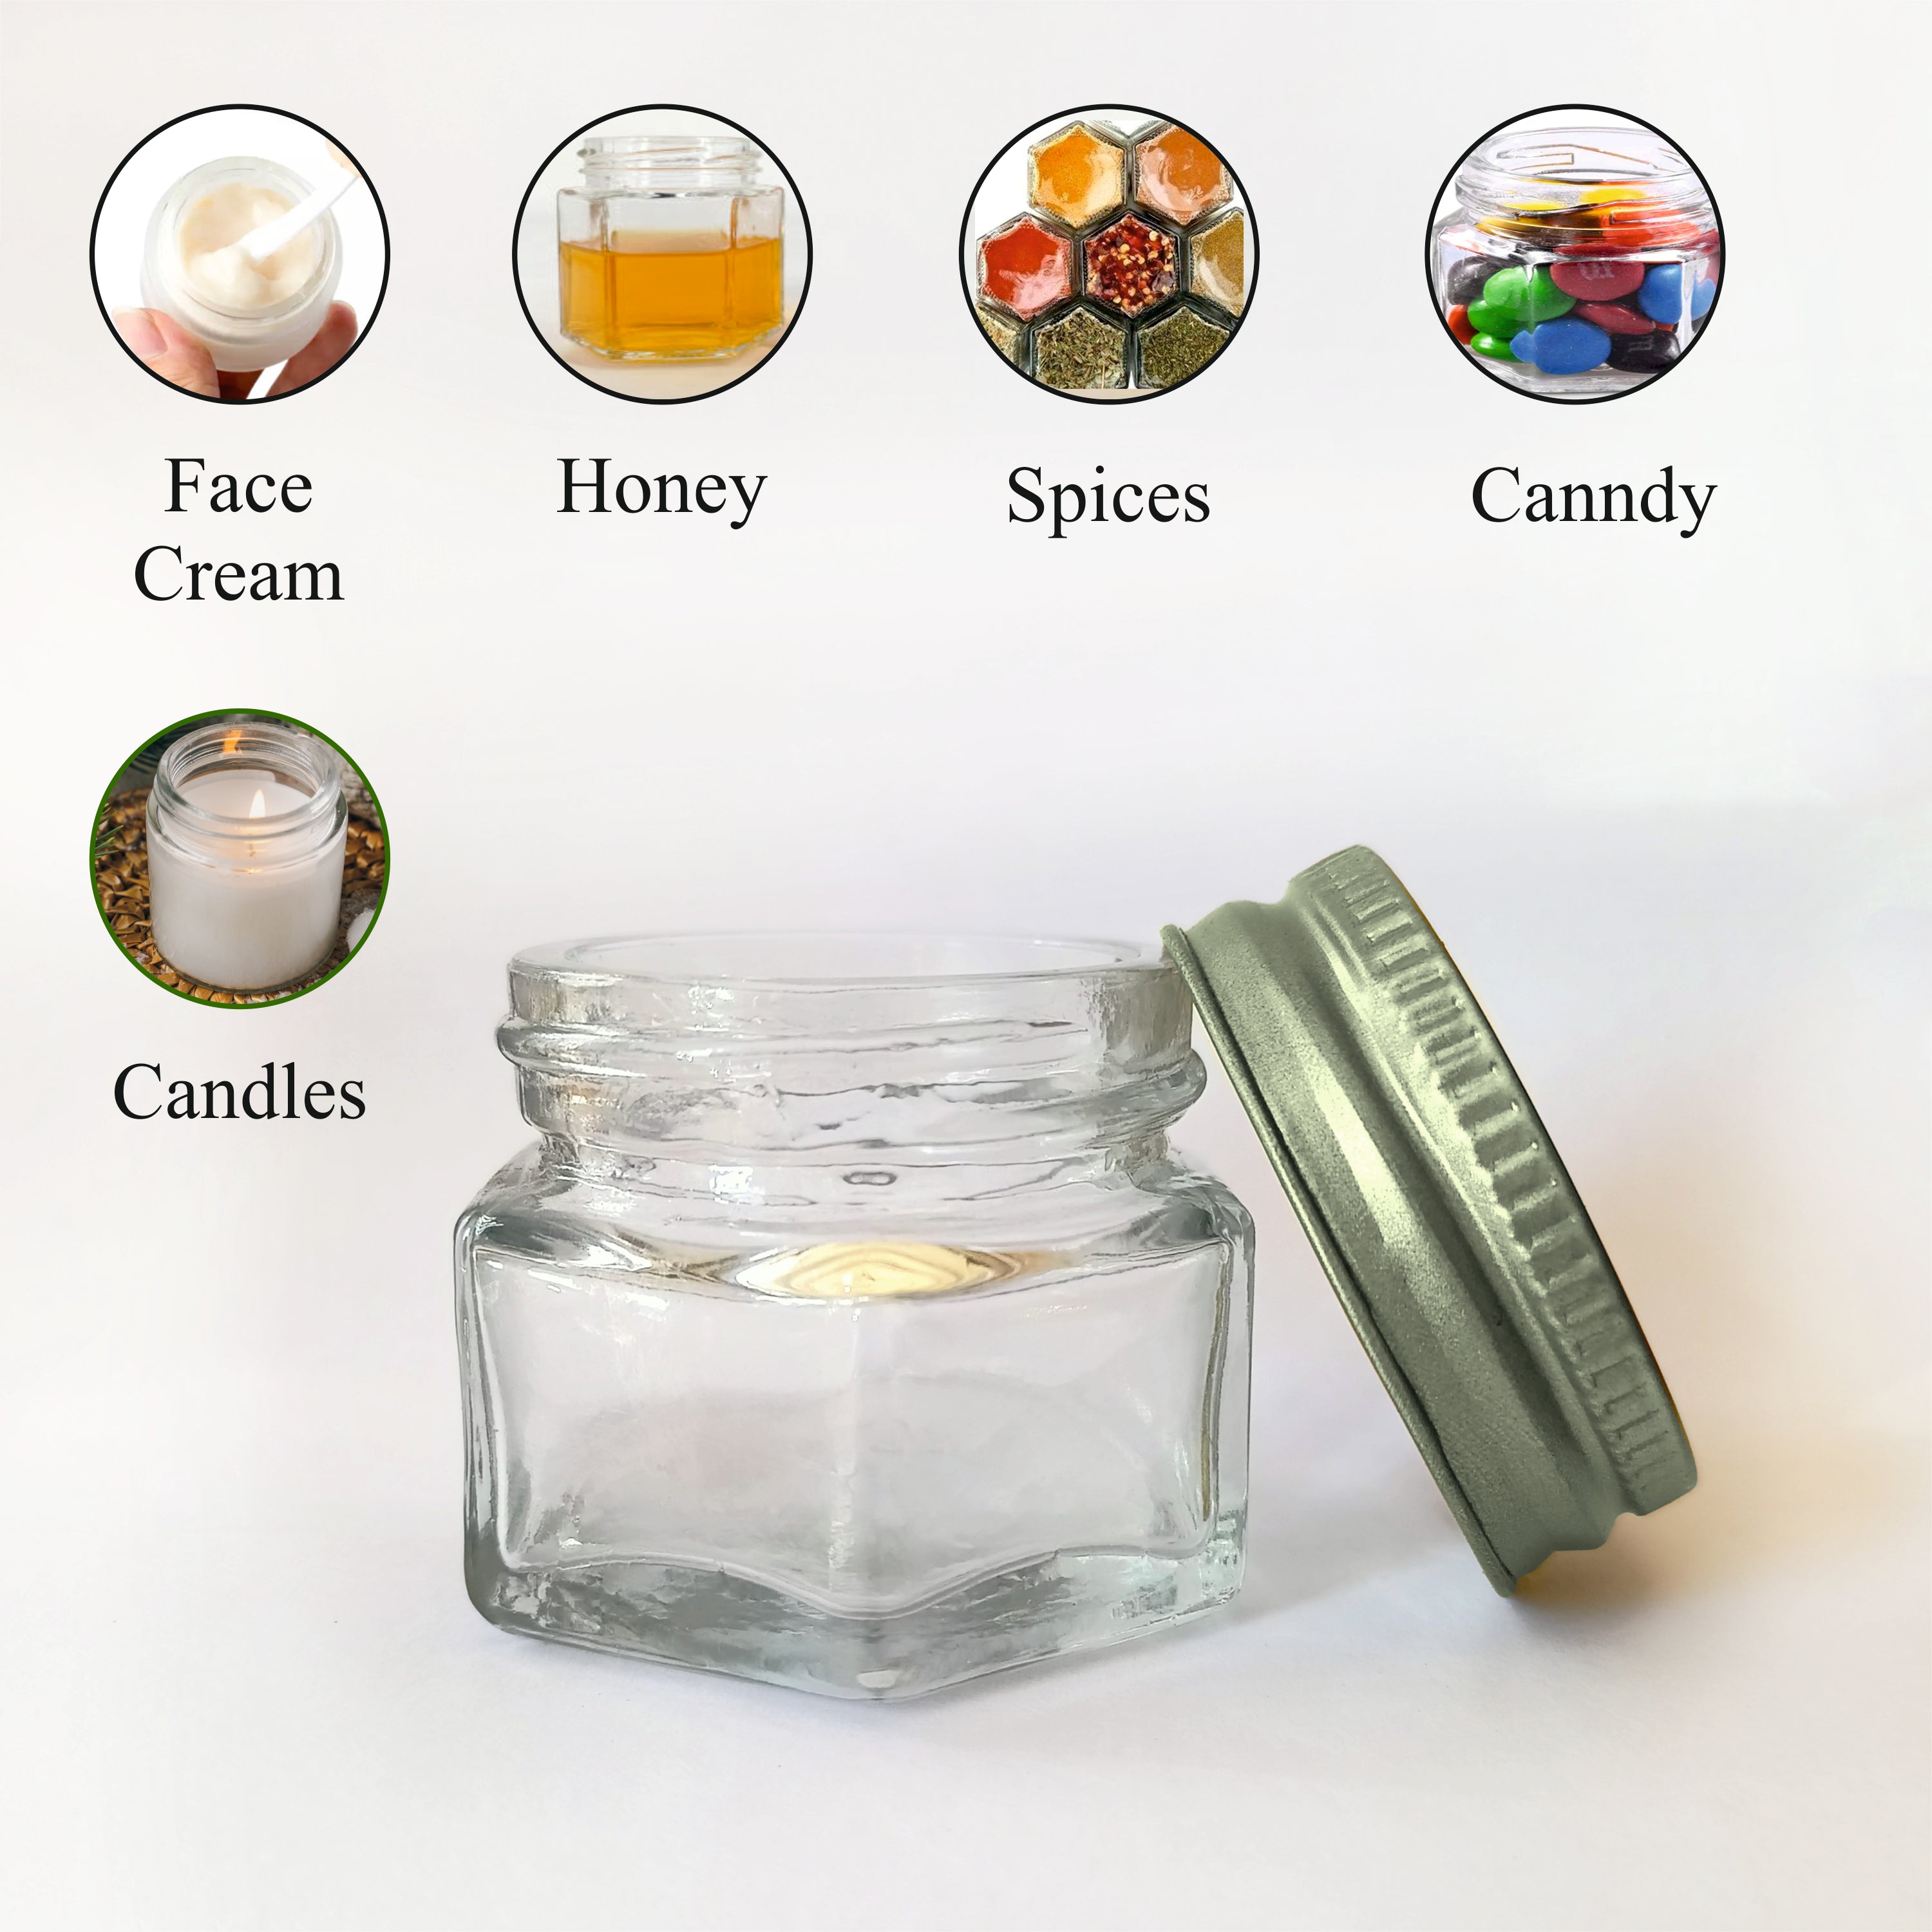 |ZMJ27|  Empty Transparent Clear Glass Jar with Dull Green Tin Lid  |25gm|